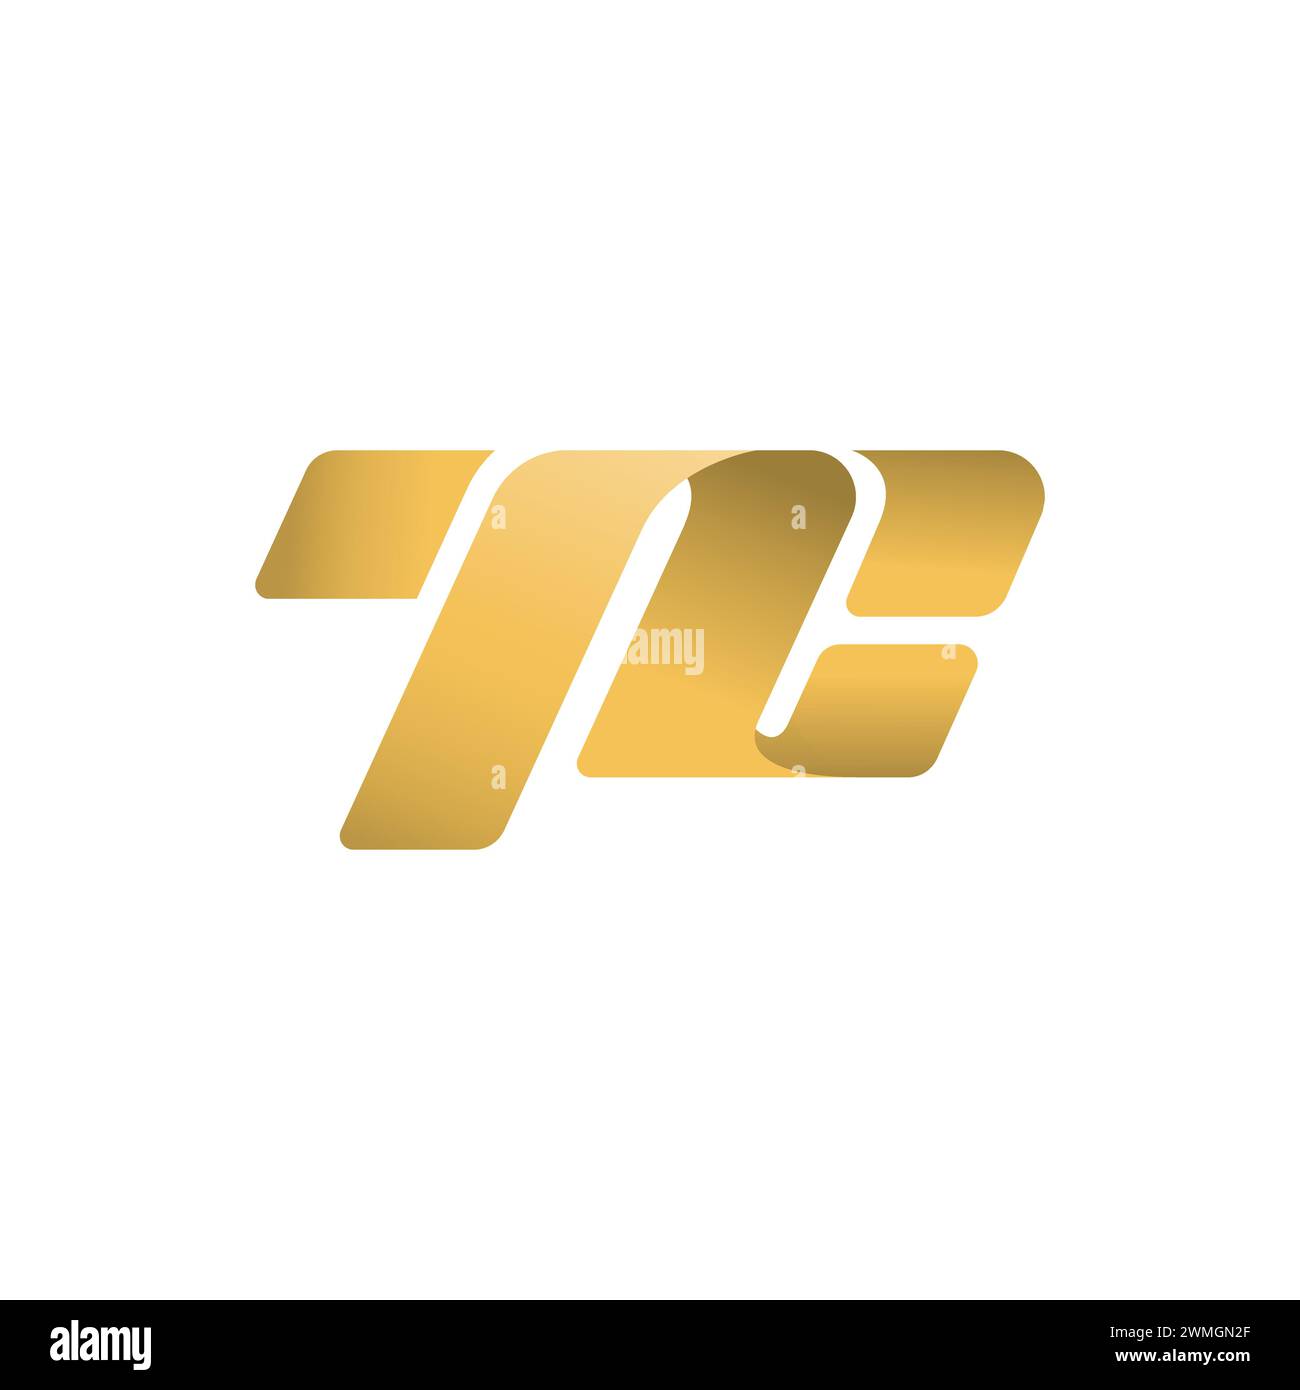 Initial letter tc logo design template linked vector image. TC logo initial letter design template vector illustration Stock Vector